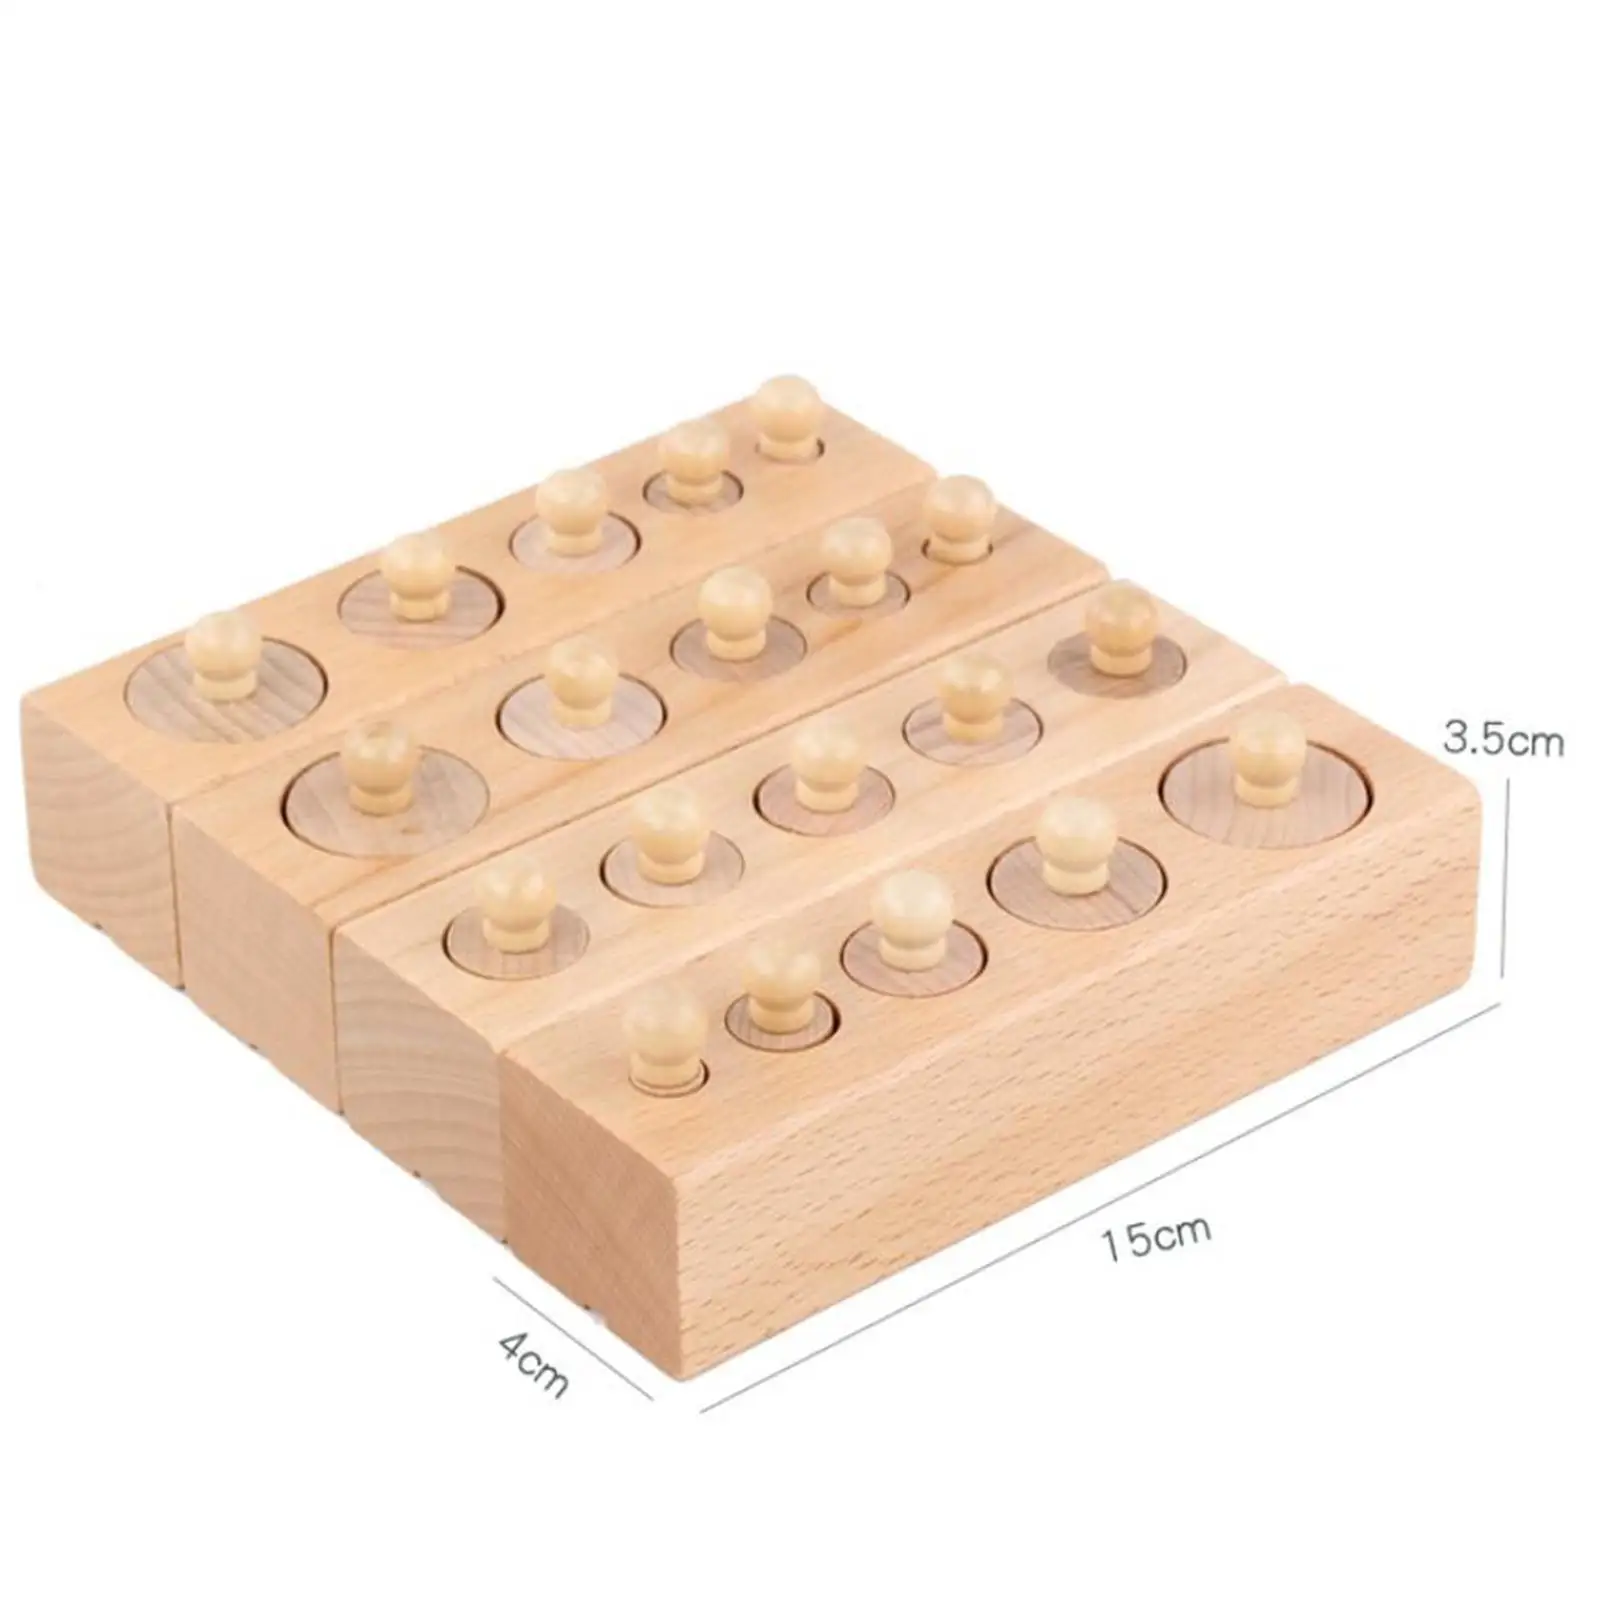 4x Cylinder Socket Toy Puzzle Coordination Early Development Wooden Knob Log Cylinder Blocks for School Preschool Toys Childern